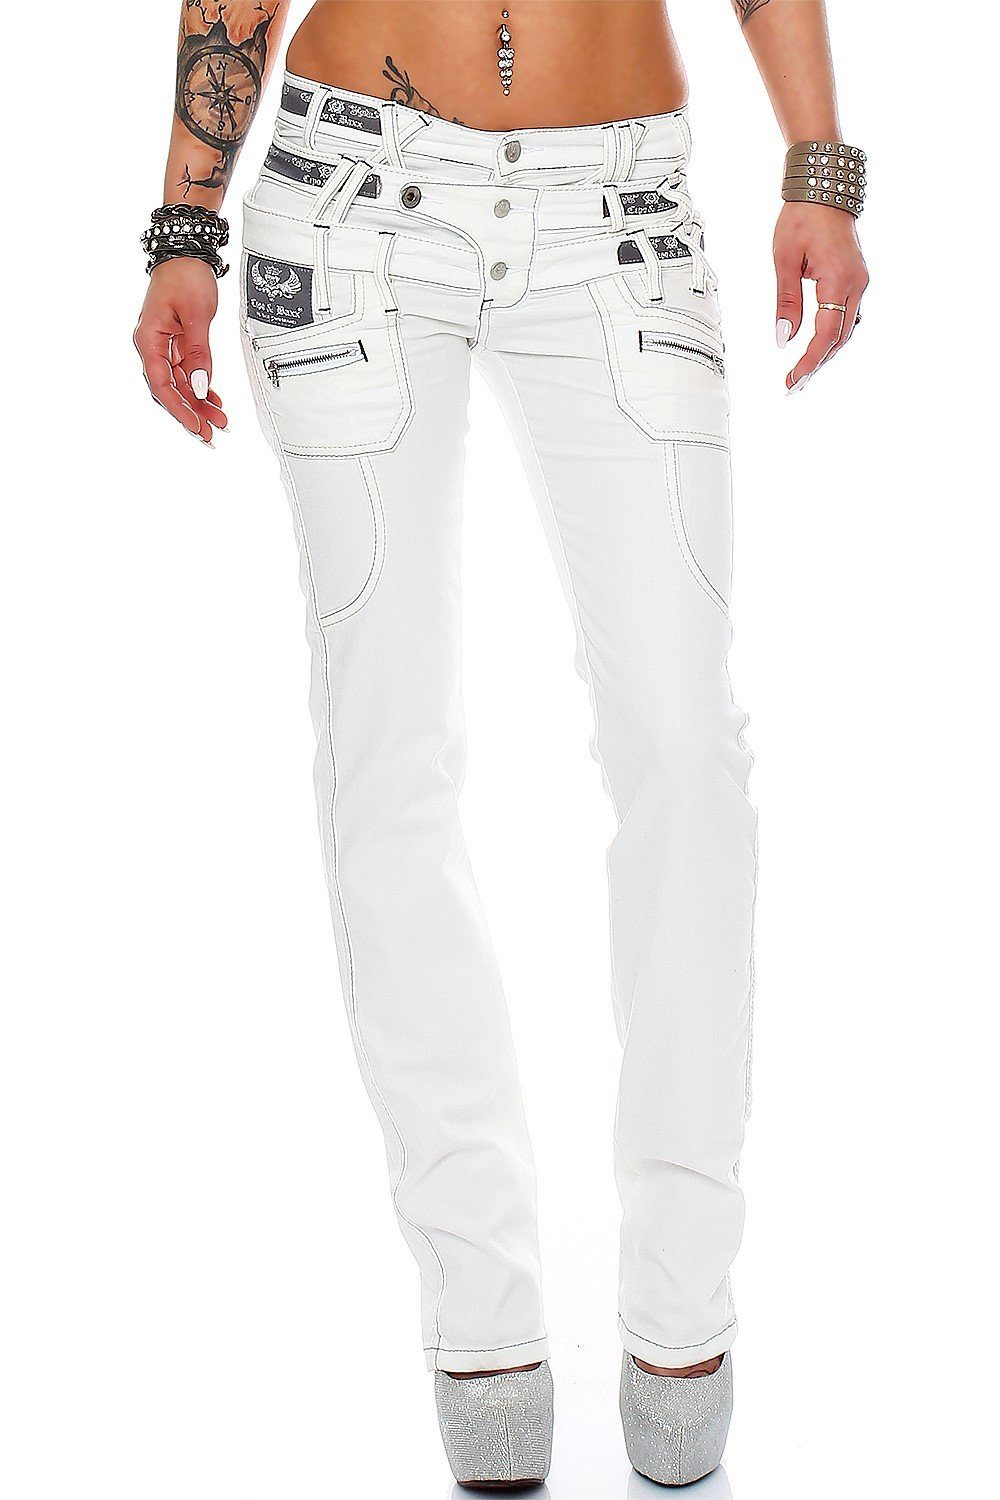 Cipo & Baxx 5-Pocket-Jeans Damen Hose BA-CBW0245 Weiße Biker Jeans mit  Zippern